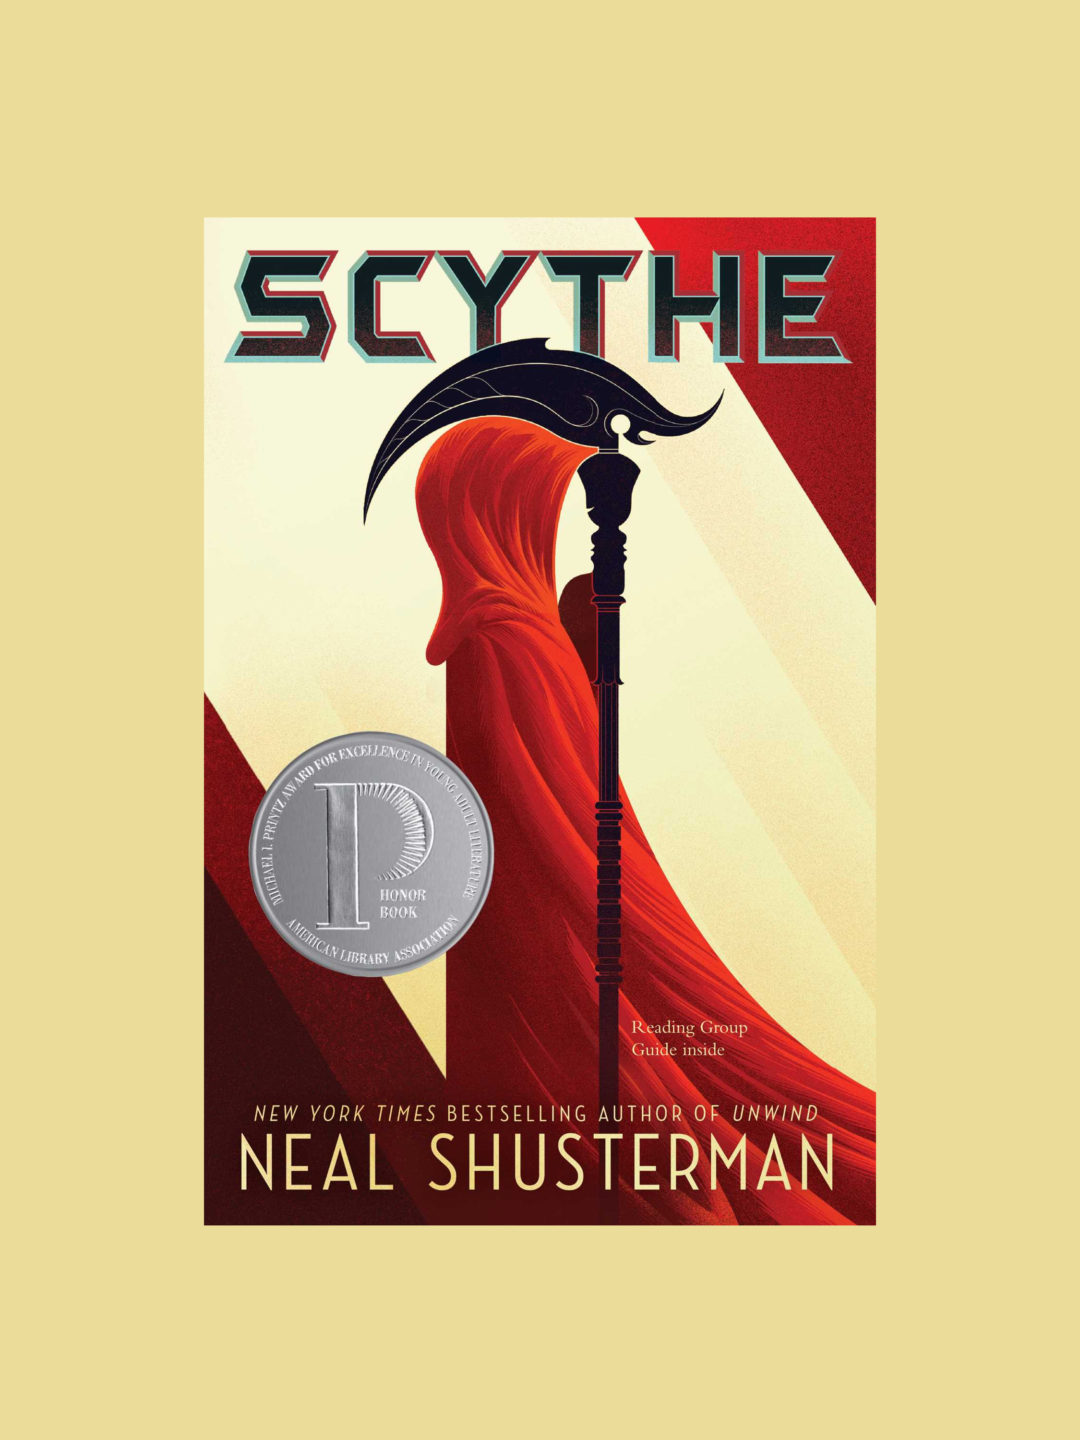 book review on scythe